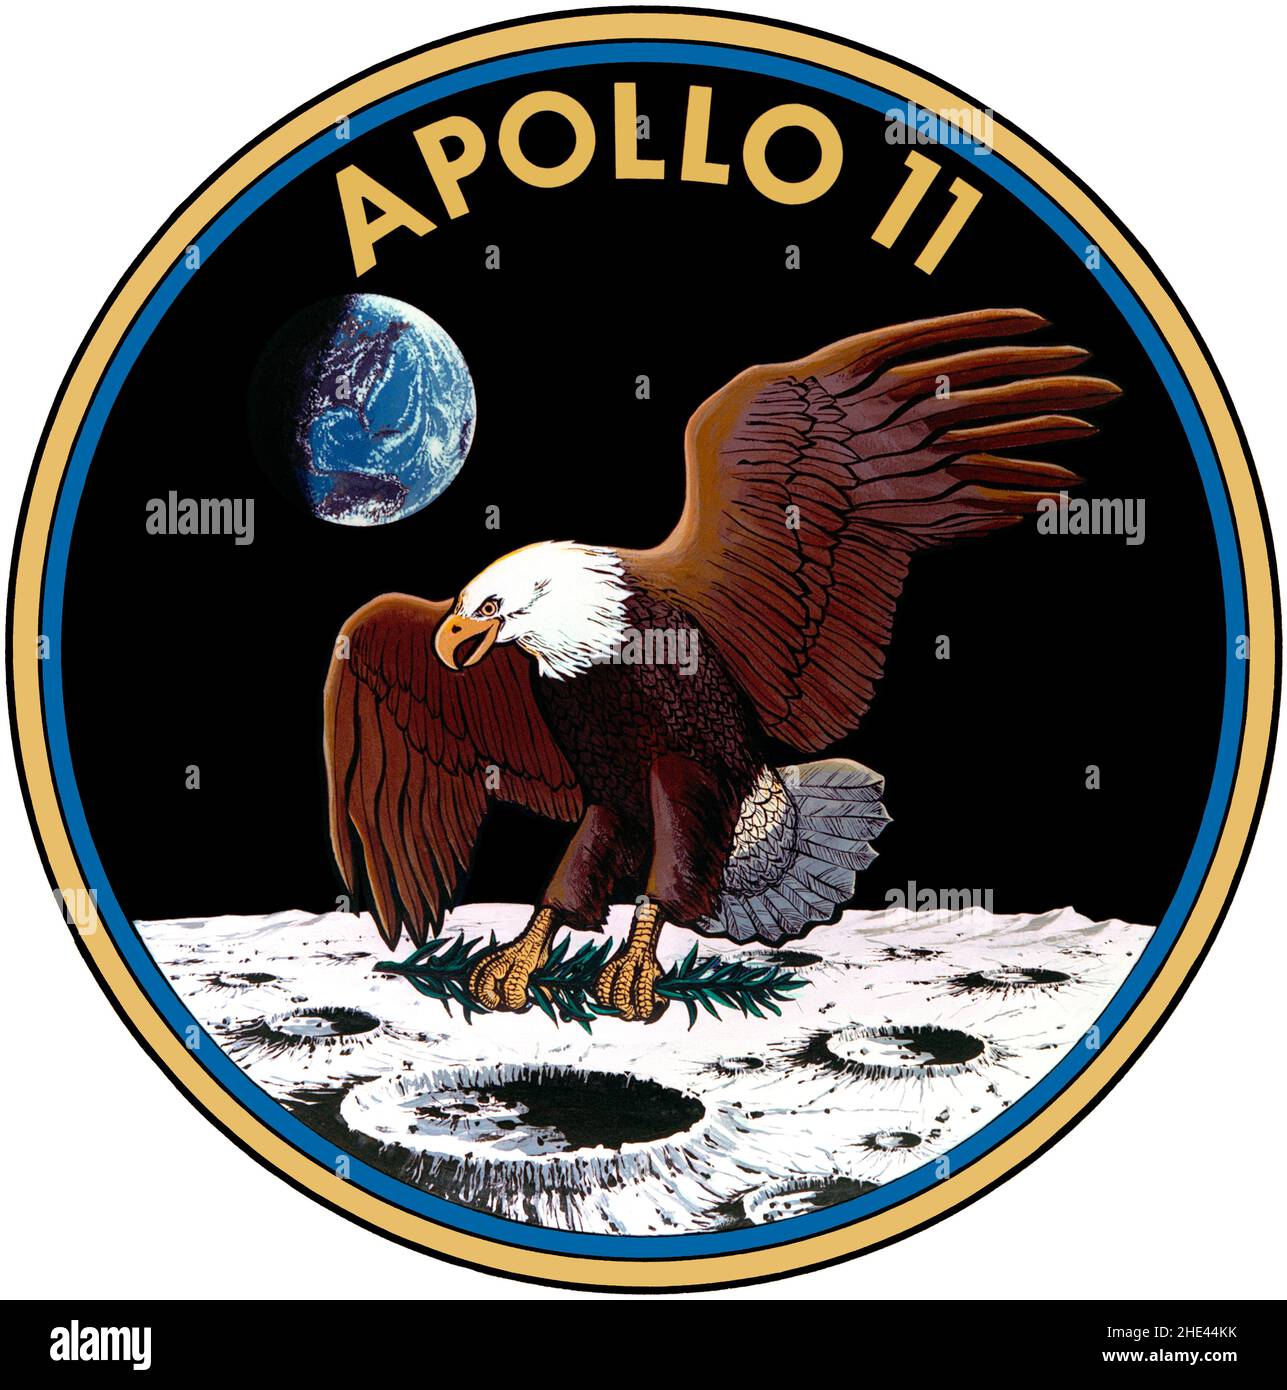 Apollo 11 badge Stock Photo